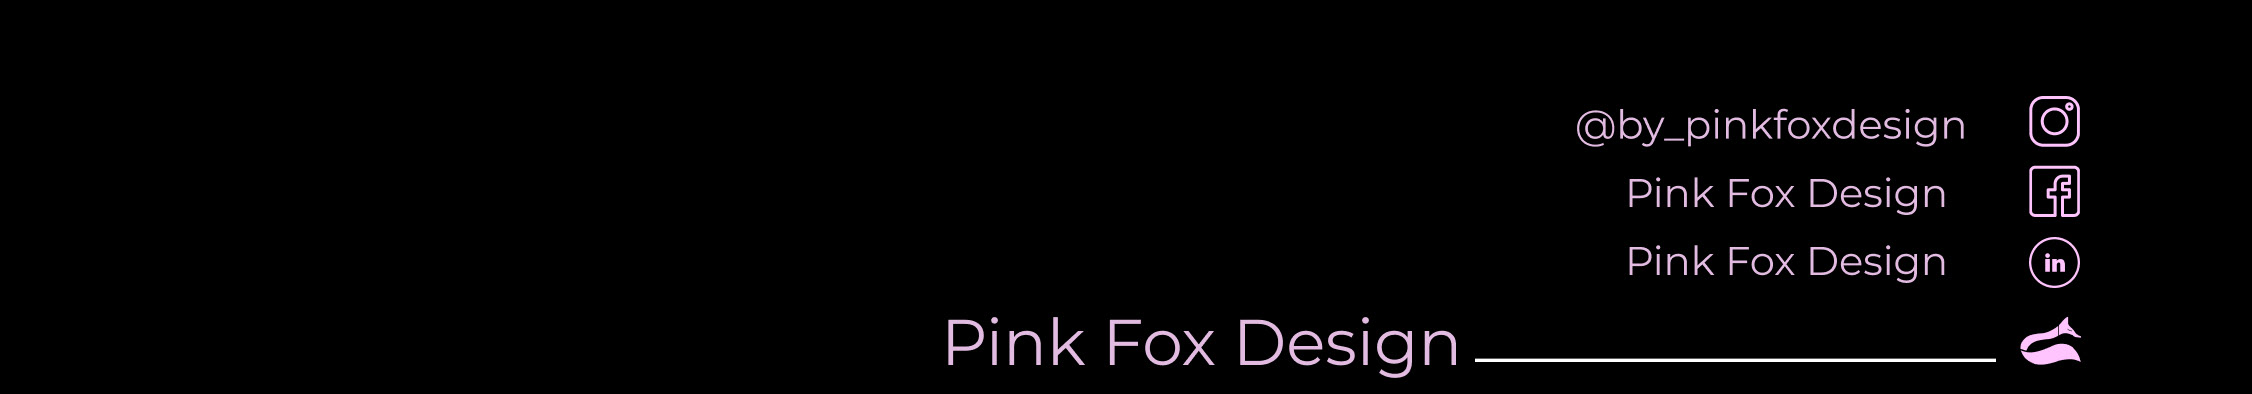 Pink Fox's profile banner